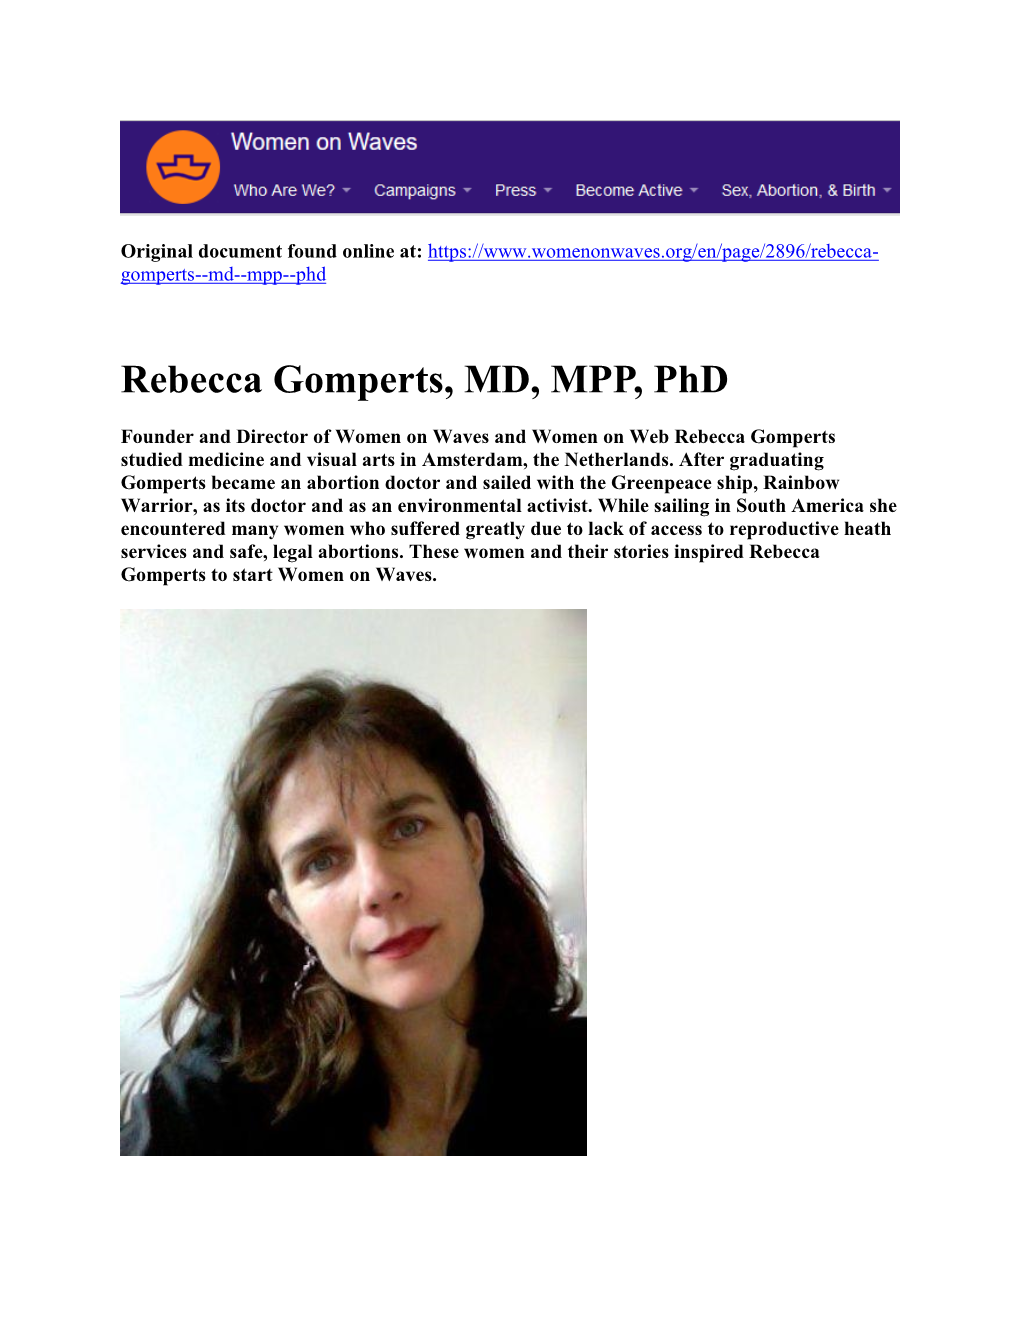 Rebecca Gomperts, MD, MPP, Phd